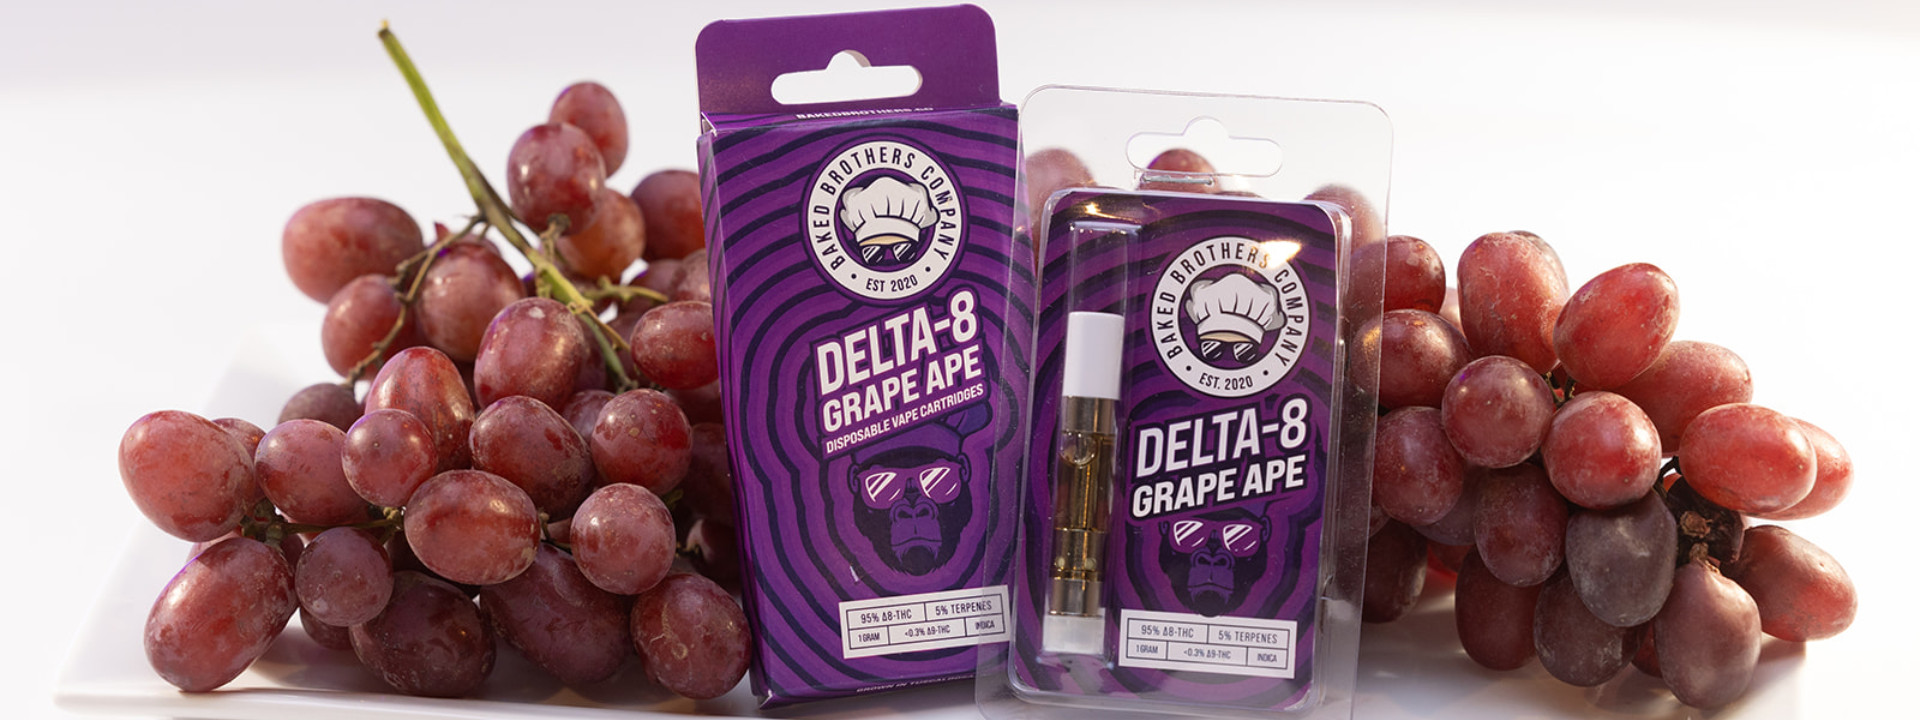 1ml Delta-8 Grape Ape Cart